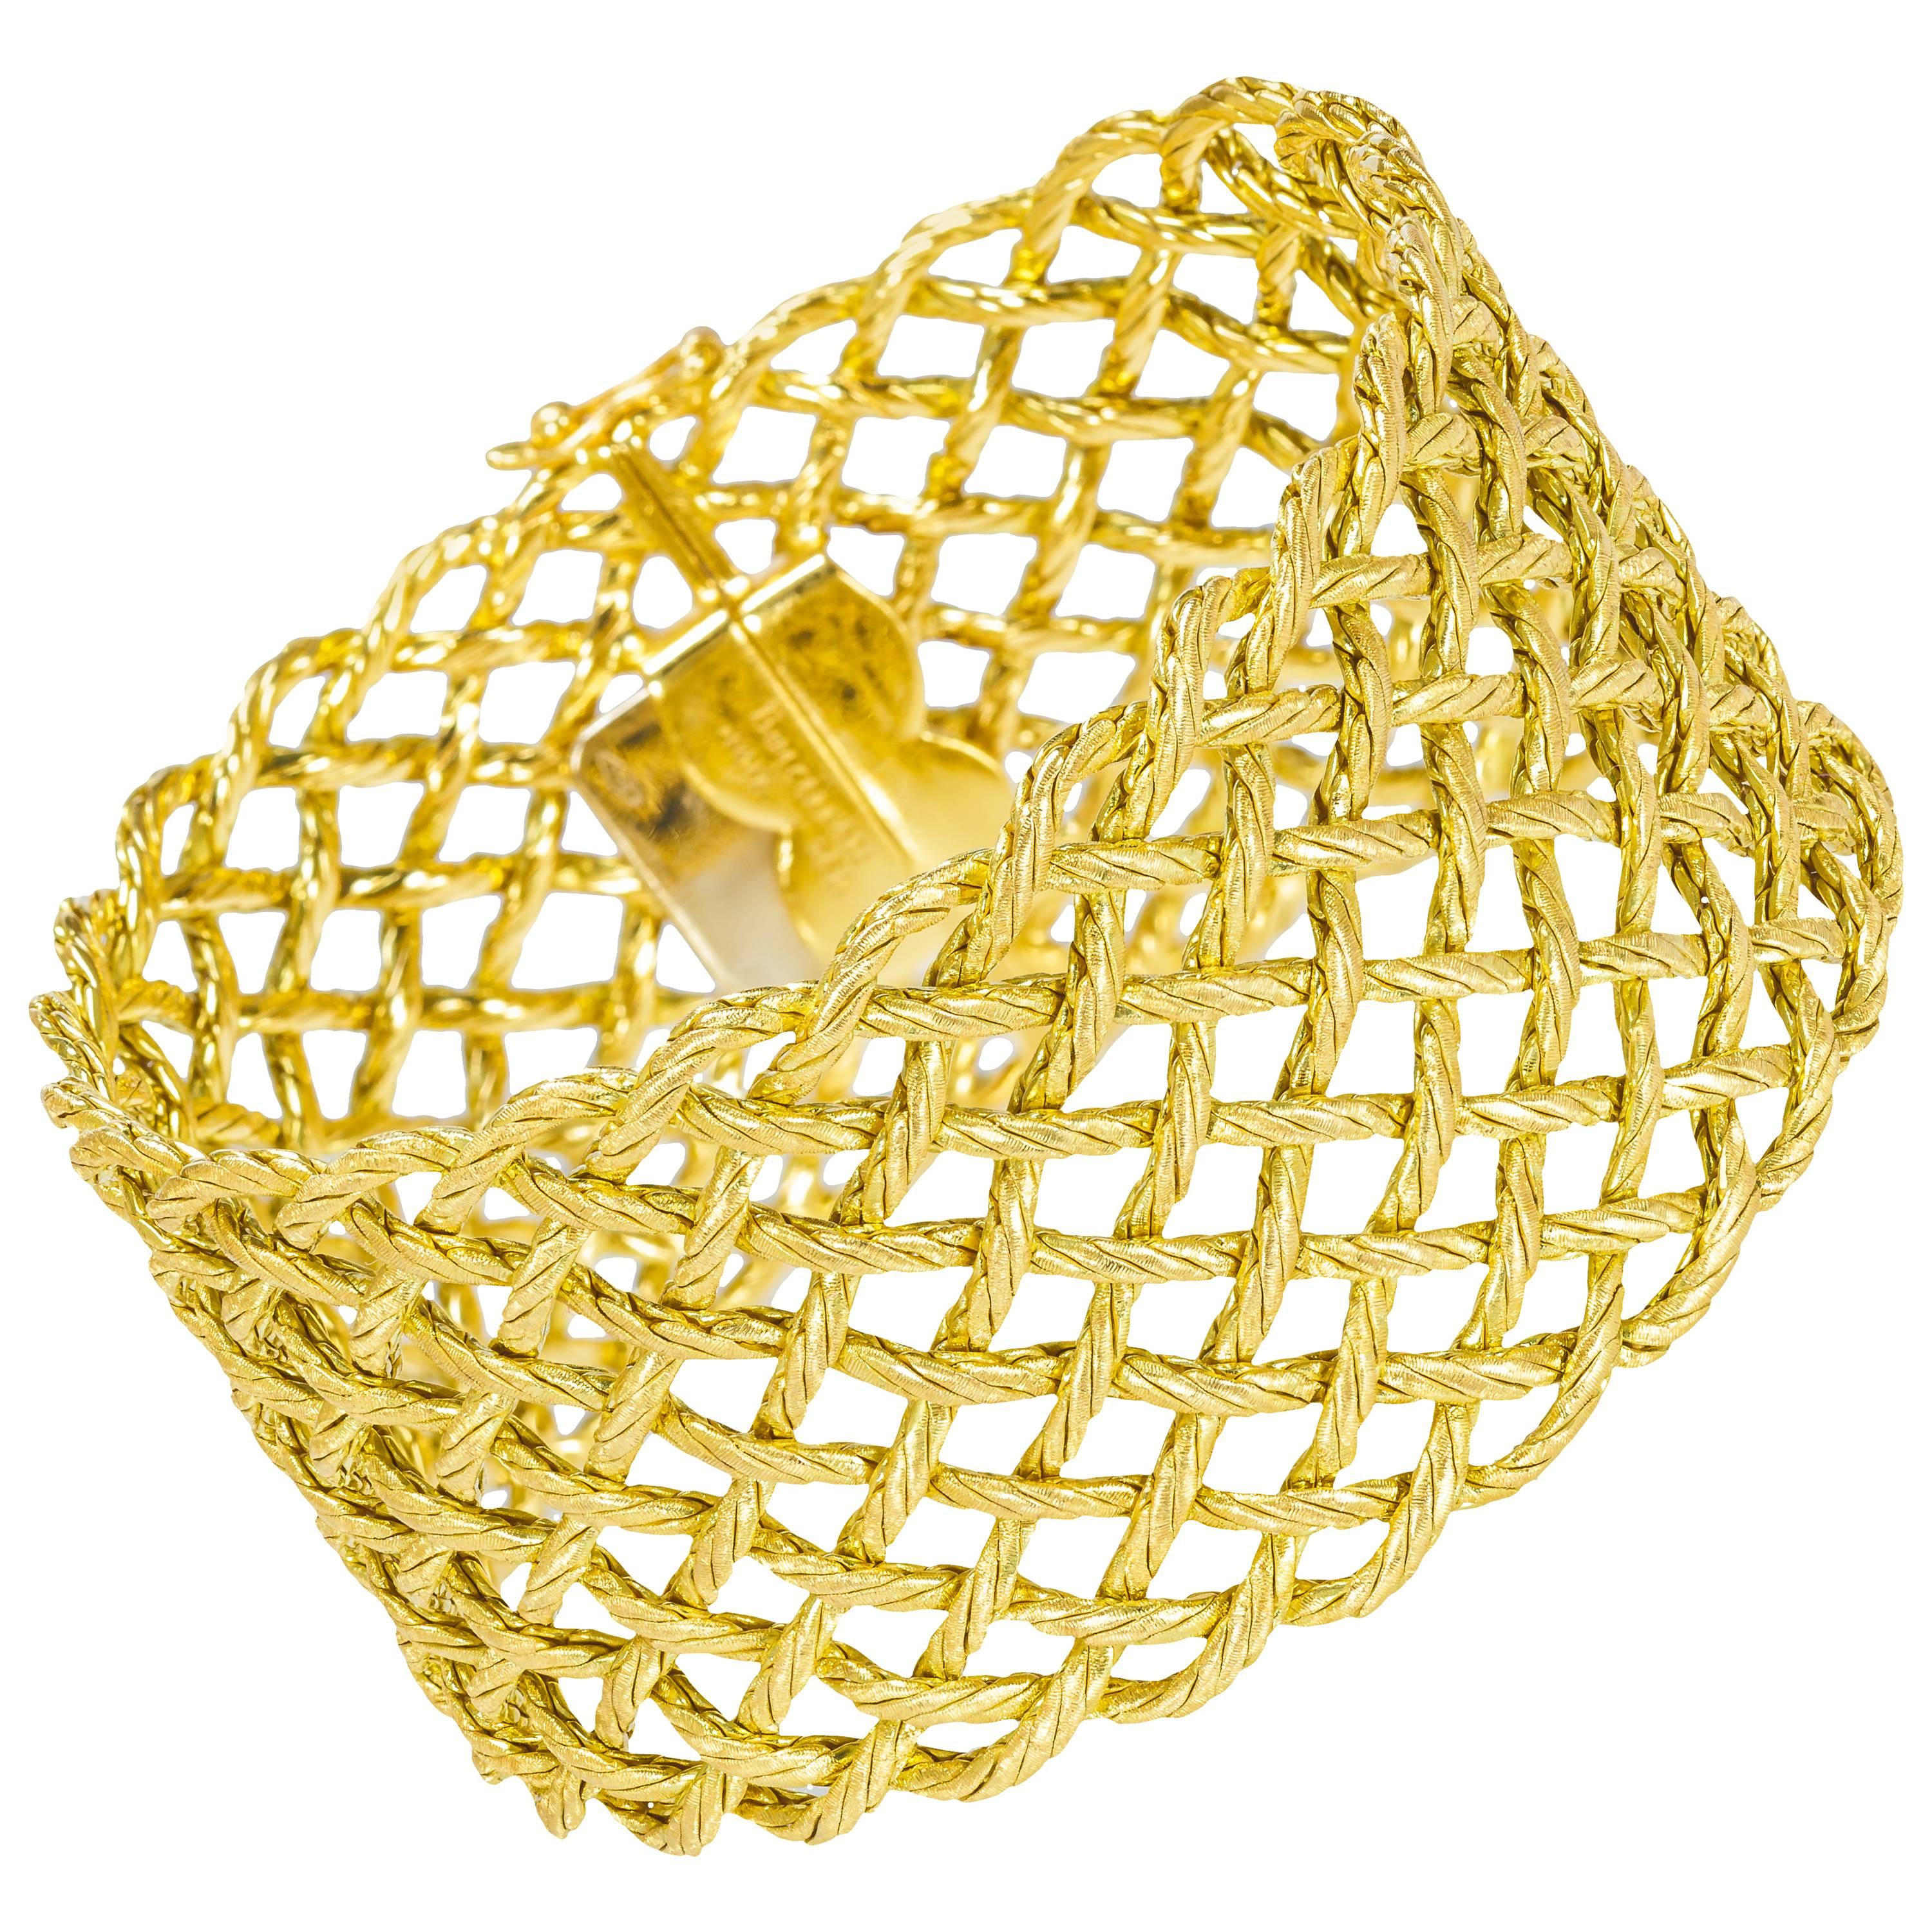 Buccellati Crepe de Chine, 12 Row Chain Woven Gold Bracelet, 7 3/8" Long